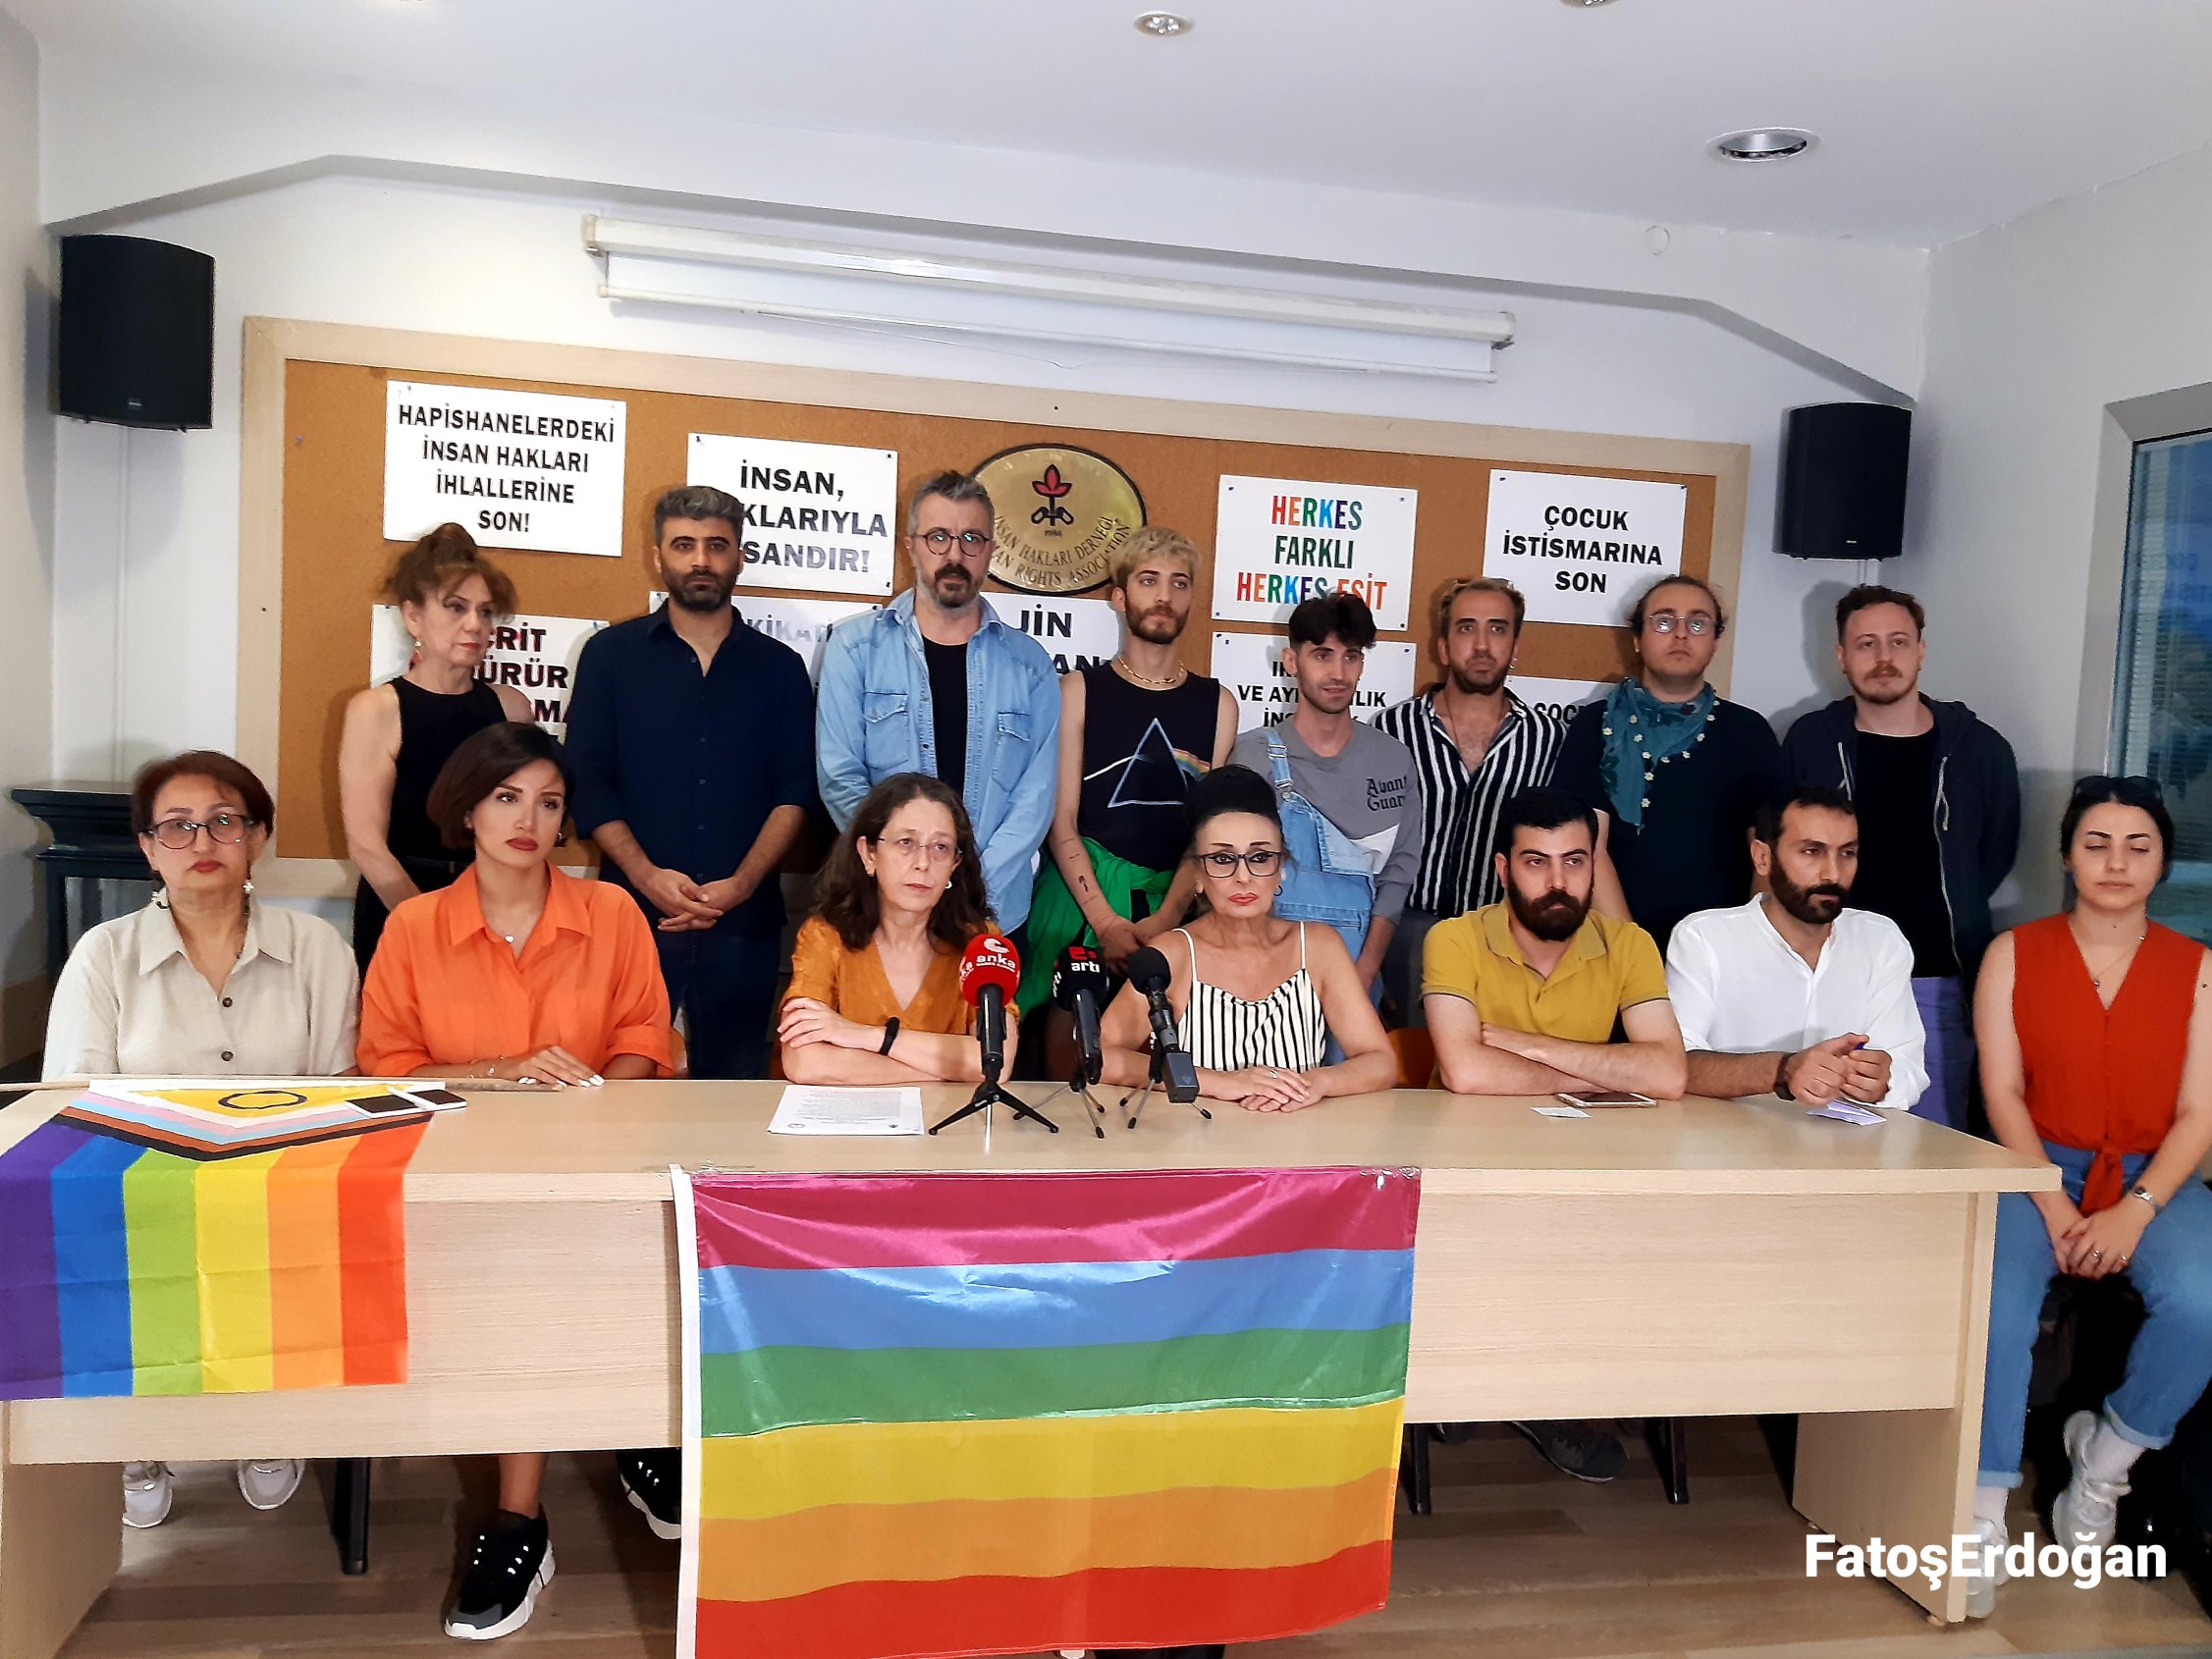 İstanbul Onur Yürüyüşü’nde gözaltına alınan İranlı mülteci Urfa’ya götürülmüş! | Kaos GL - LGBTİ+ Haber Portalı Haber